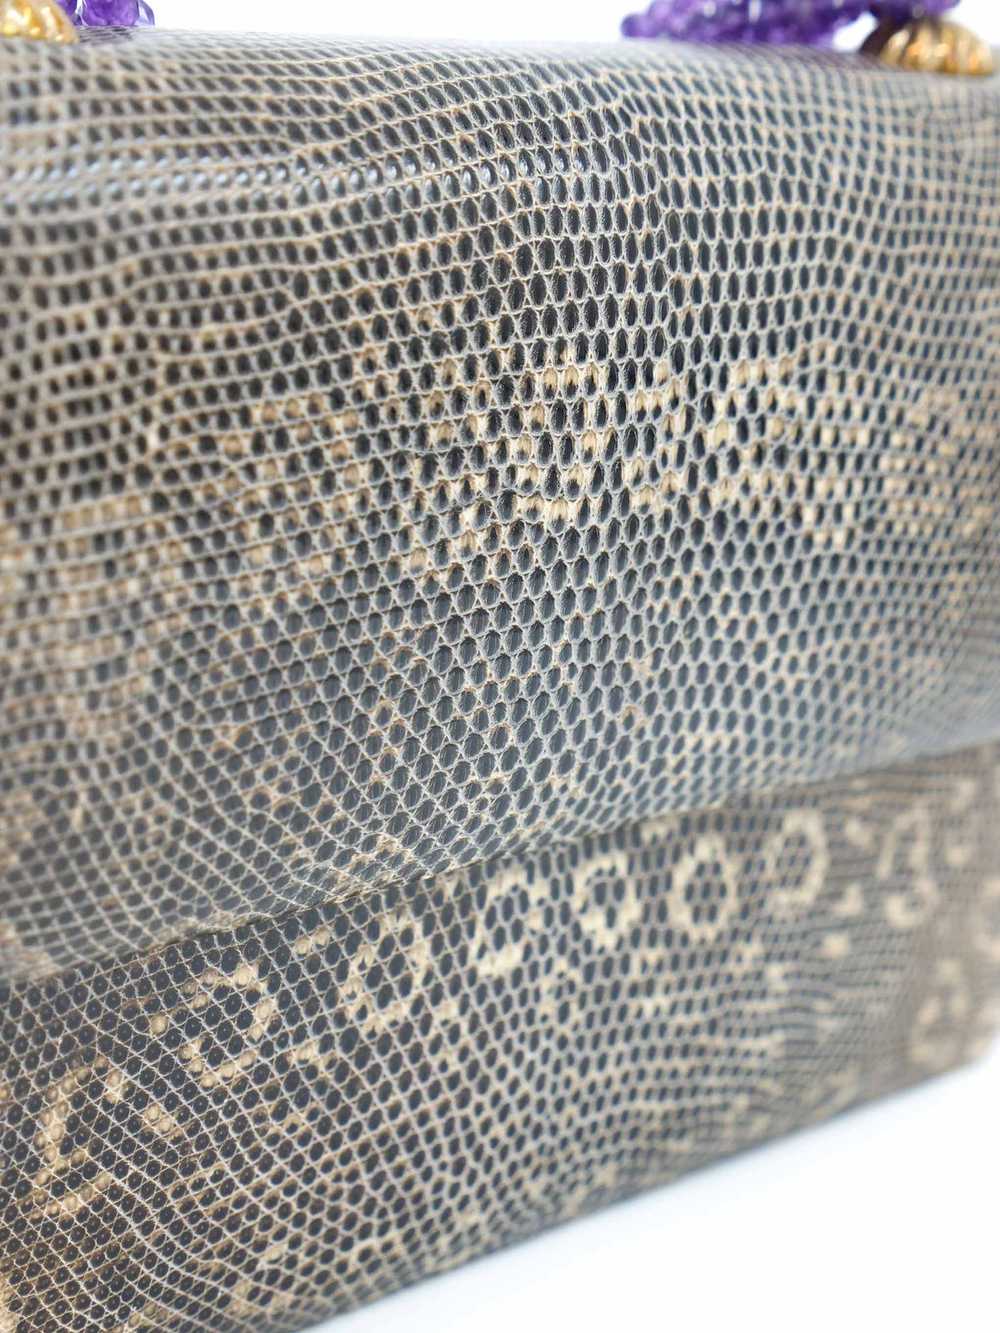 Darby Scott Lizard Skin Amethyst Handle Bag - image 2